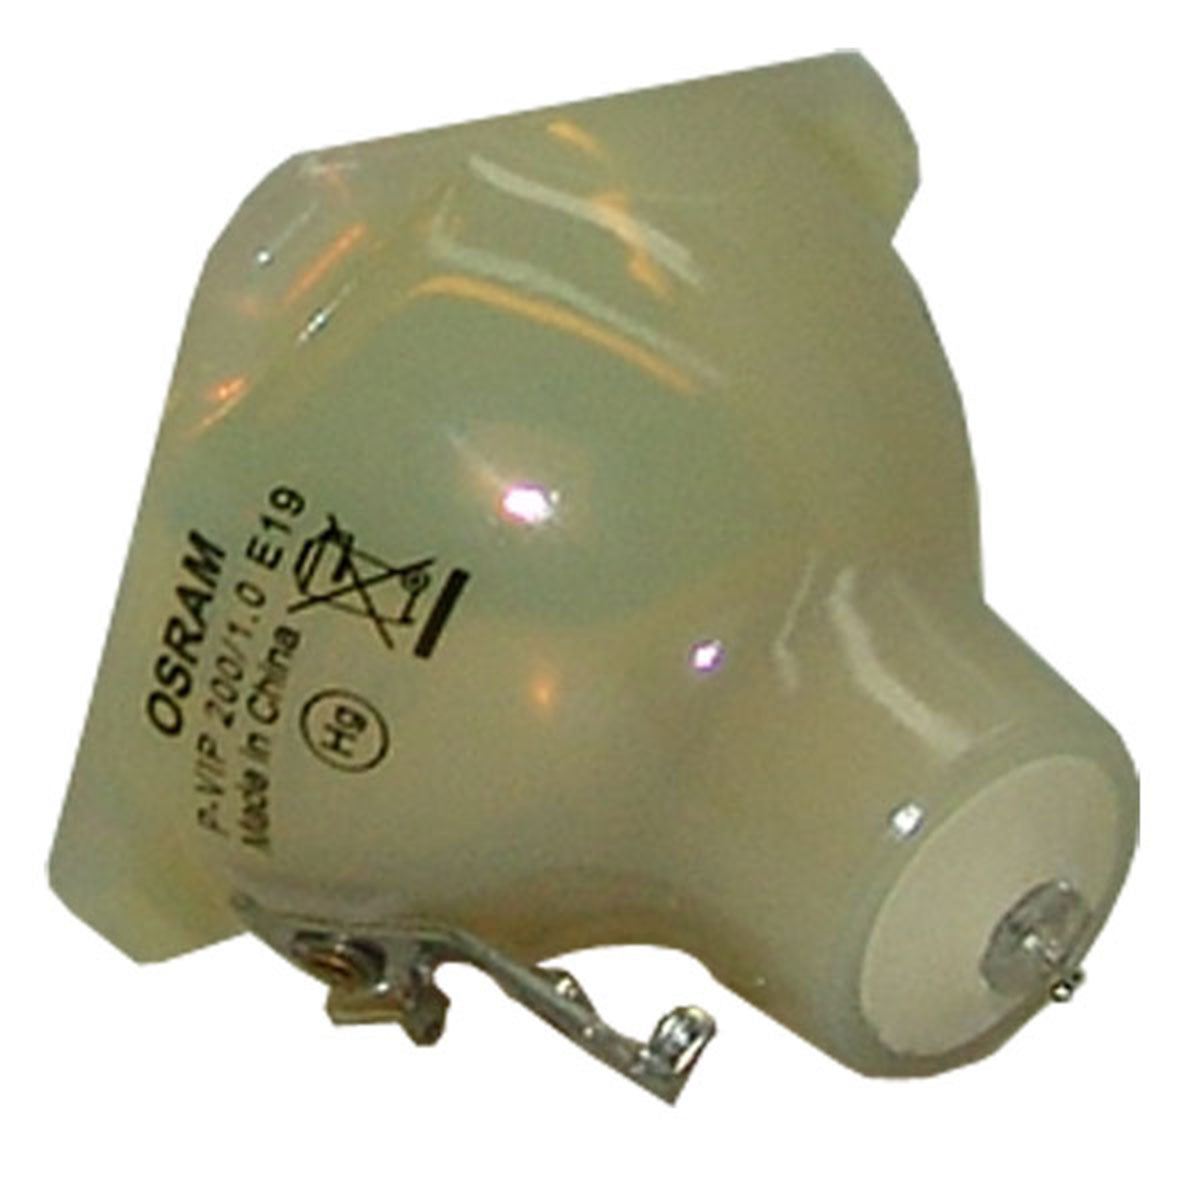 NOBO SP.82G01.001 Osram Projector Bare Lamp